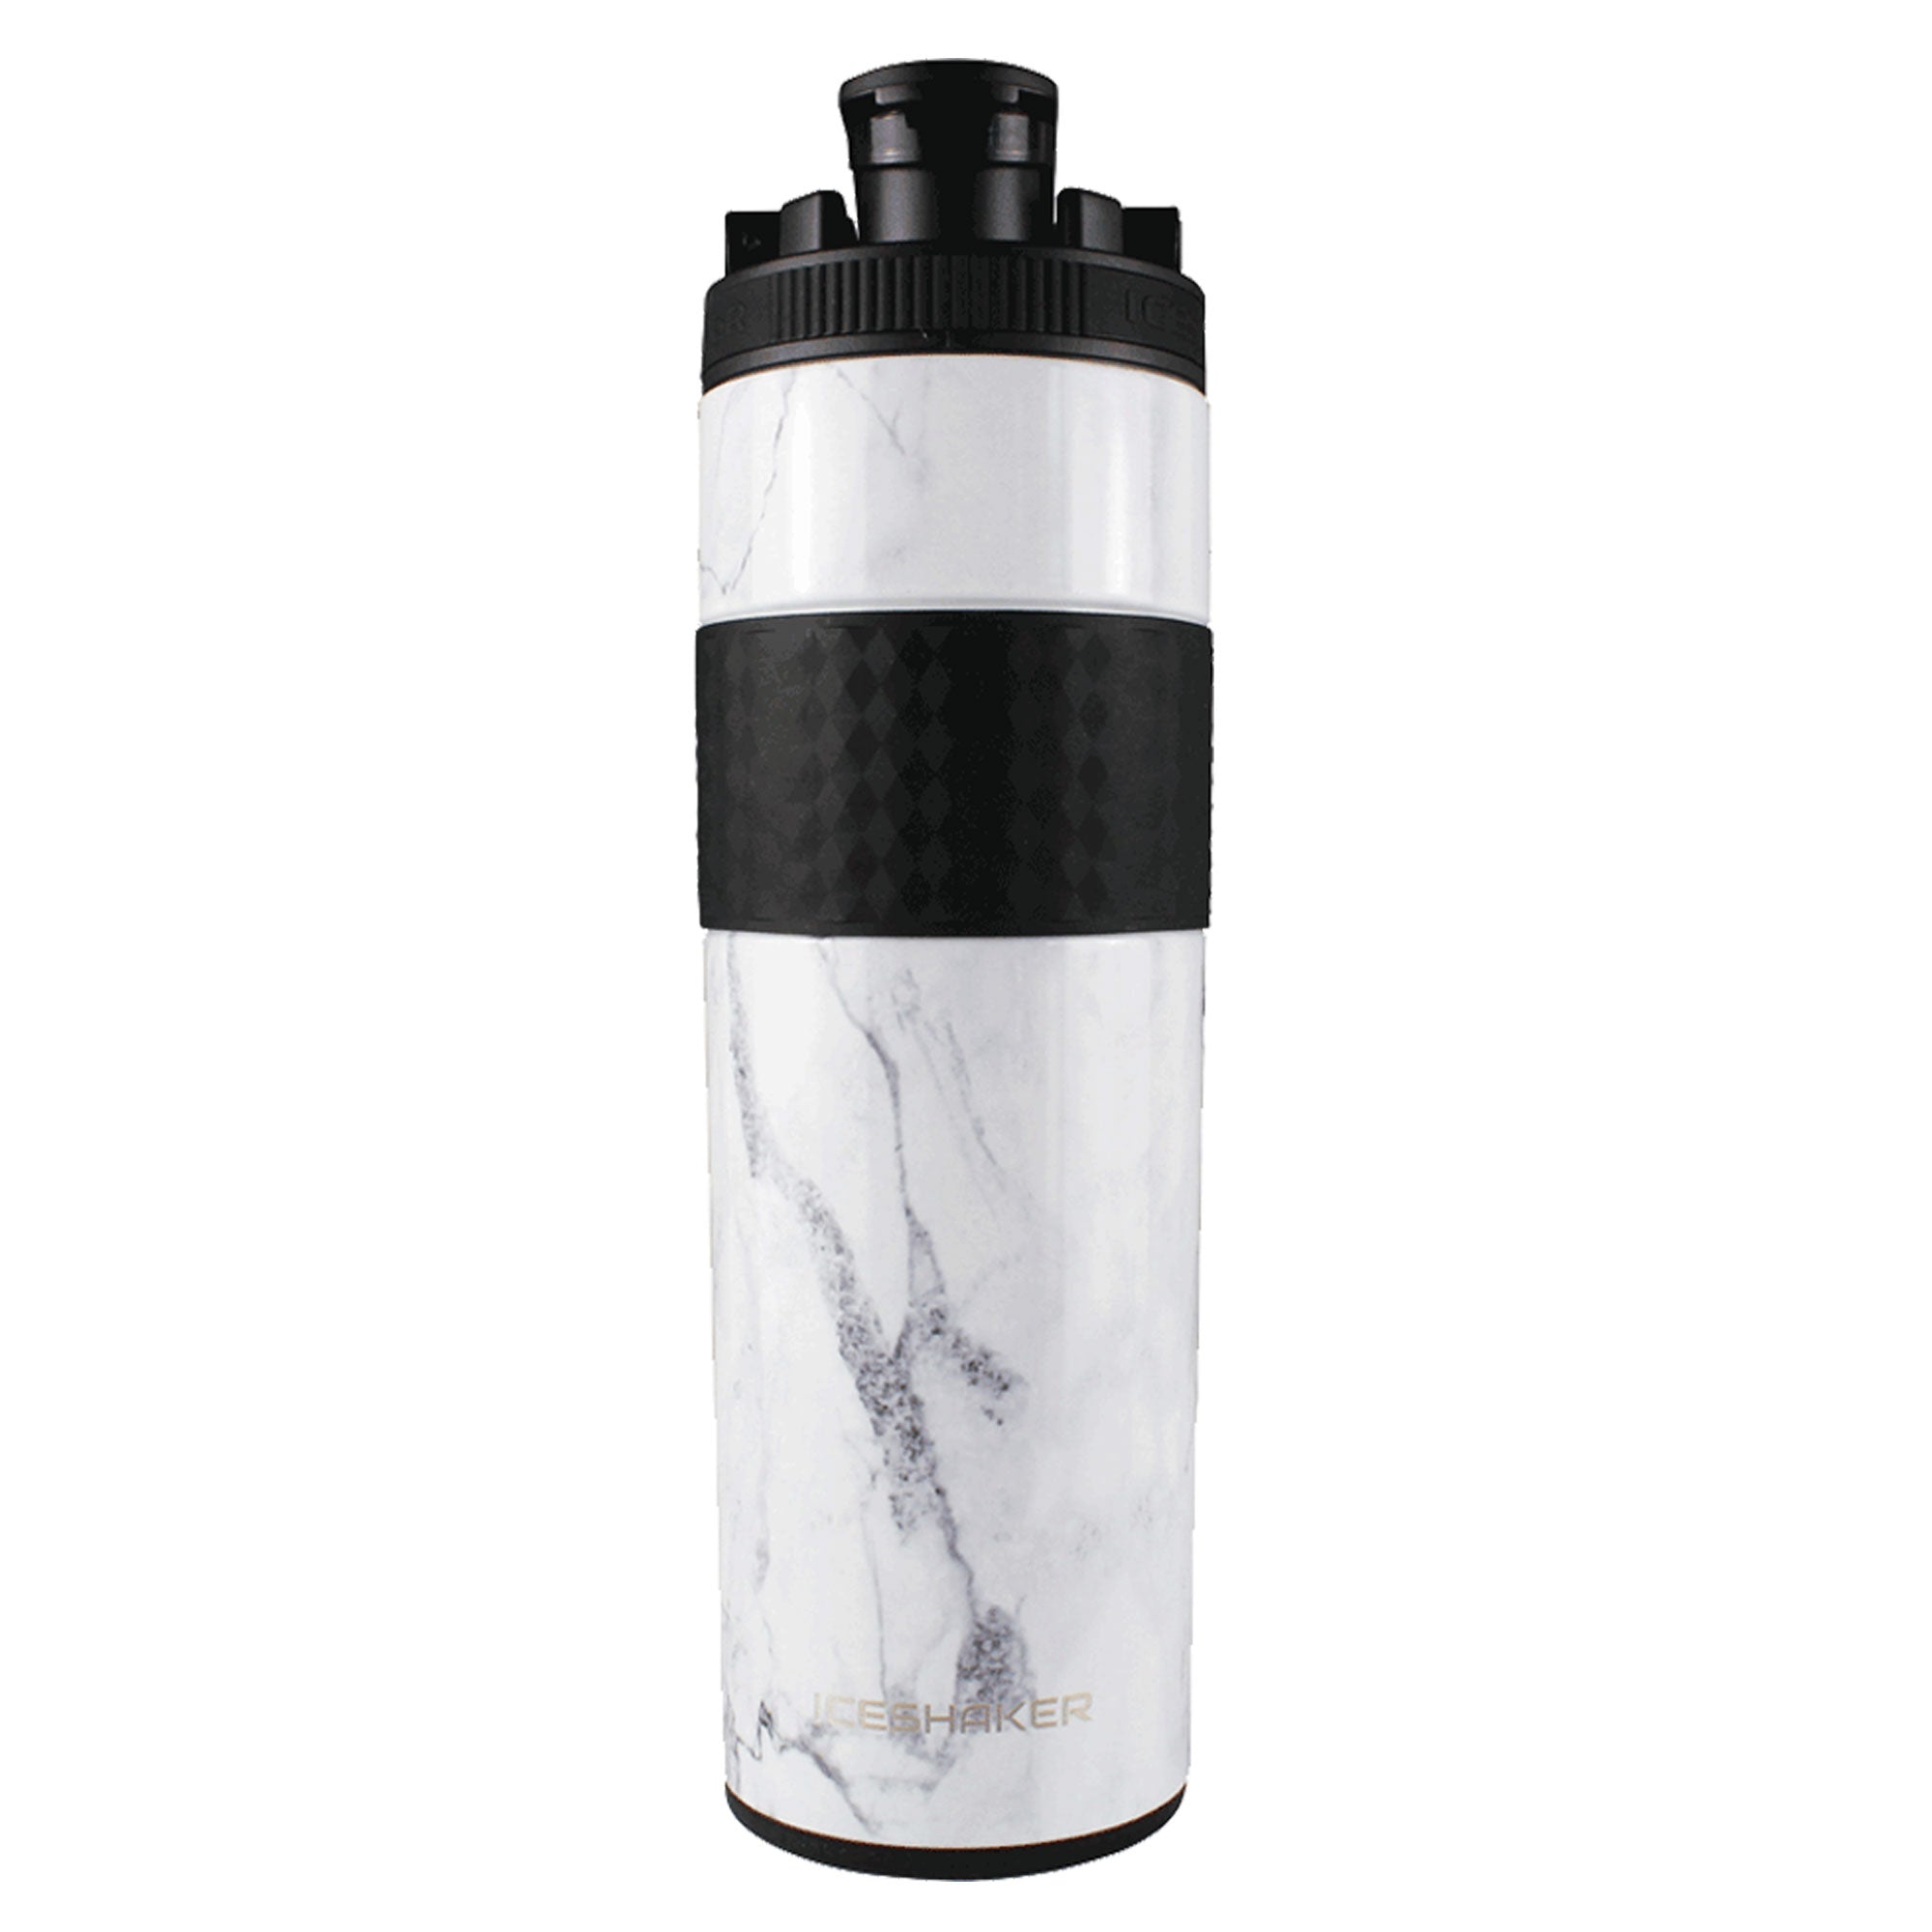  Ice Shaker 36 Oz Shaker Bottle, Stainless Steel Water Bottle  and Protein Shaker, As Seen on Shark Tank, Reusable Stainless Steel Water  Bottle, Gym Water Bottle, Red : Home & Kitchen